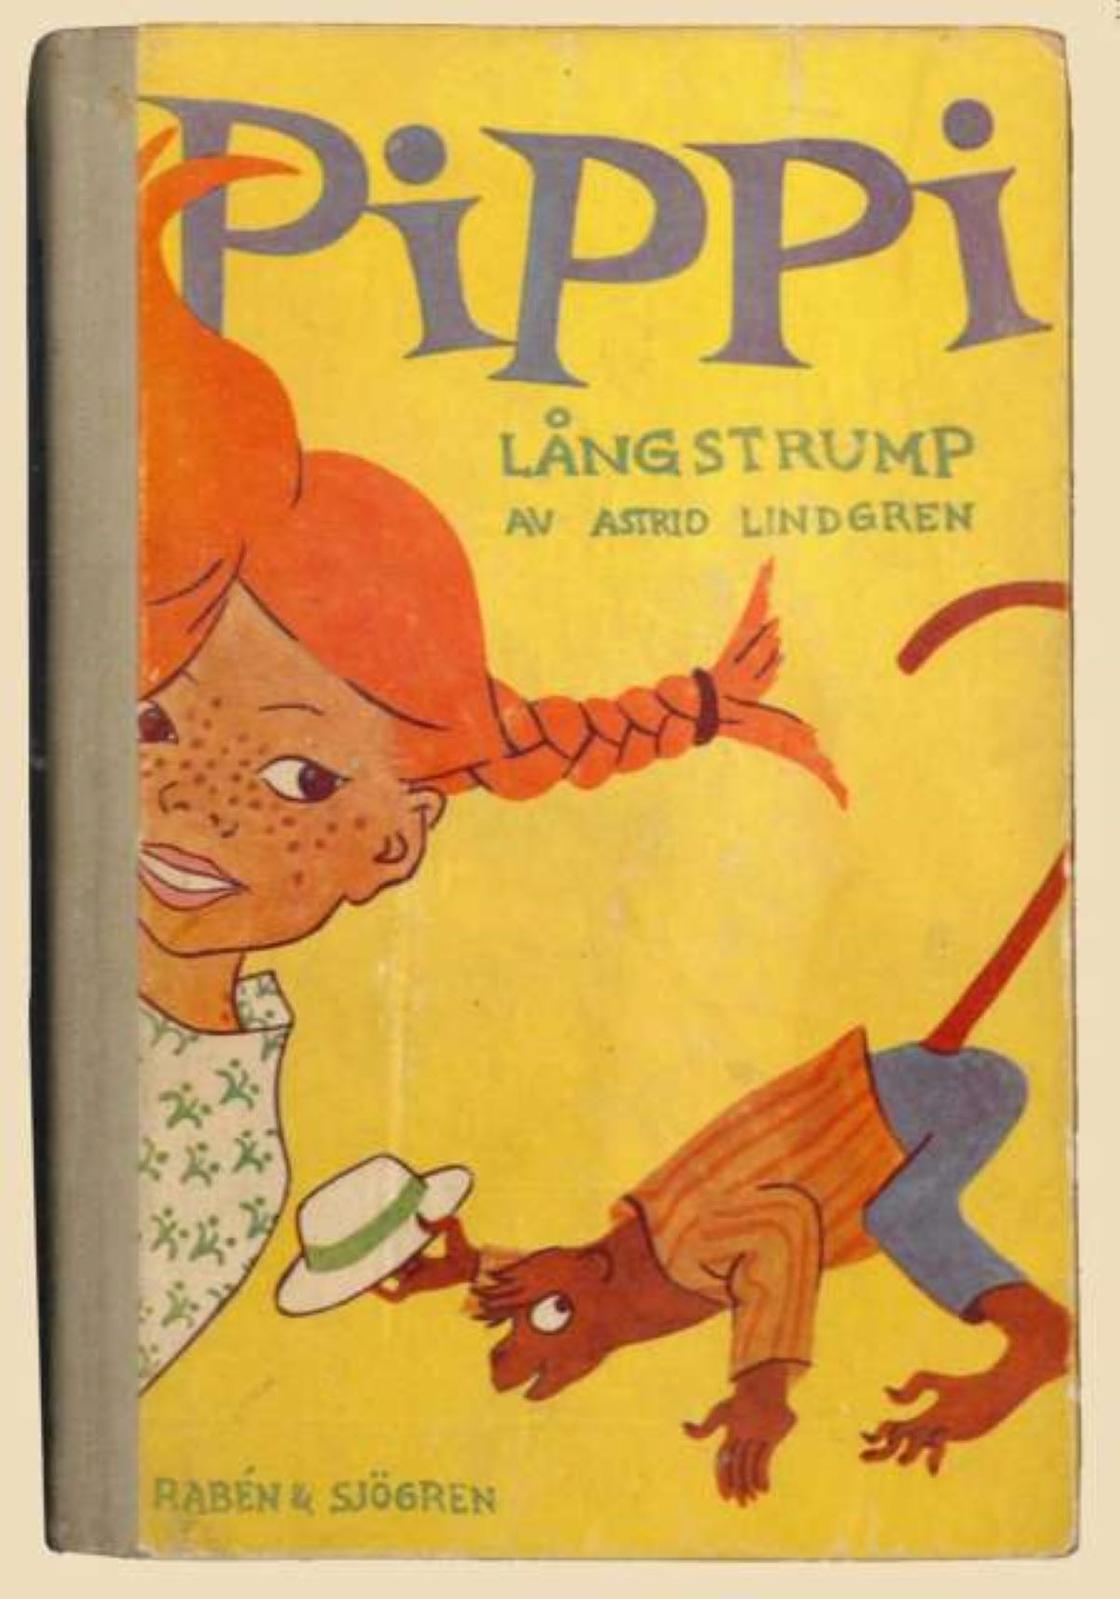 Обложка книги Астрид Линдгрен «Пеппи Длинныйчулок»